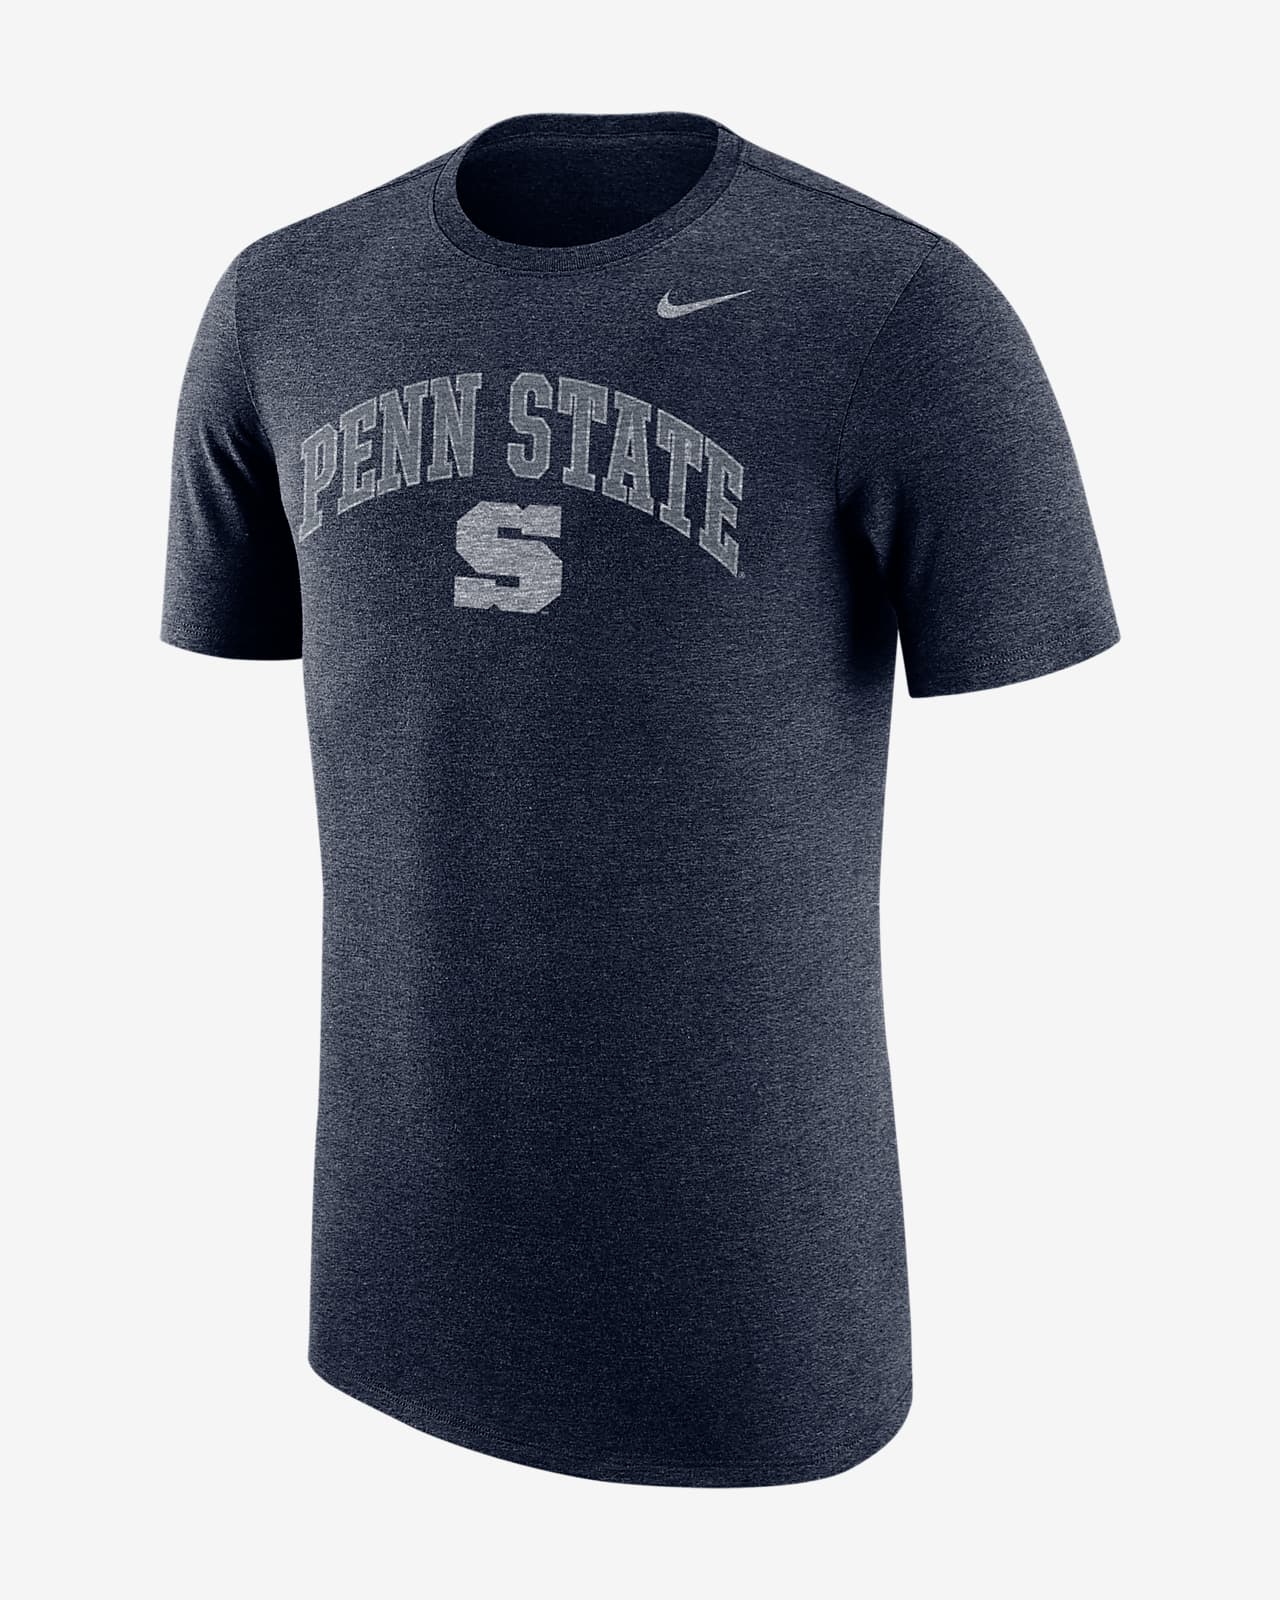 Nike College (Penn State) Men's T-Shirt. Nike.com